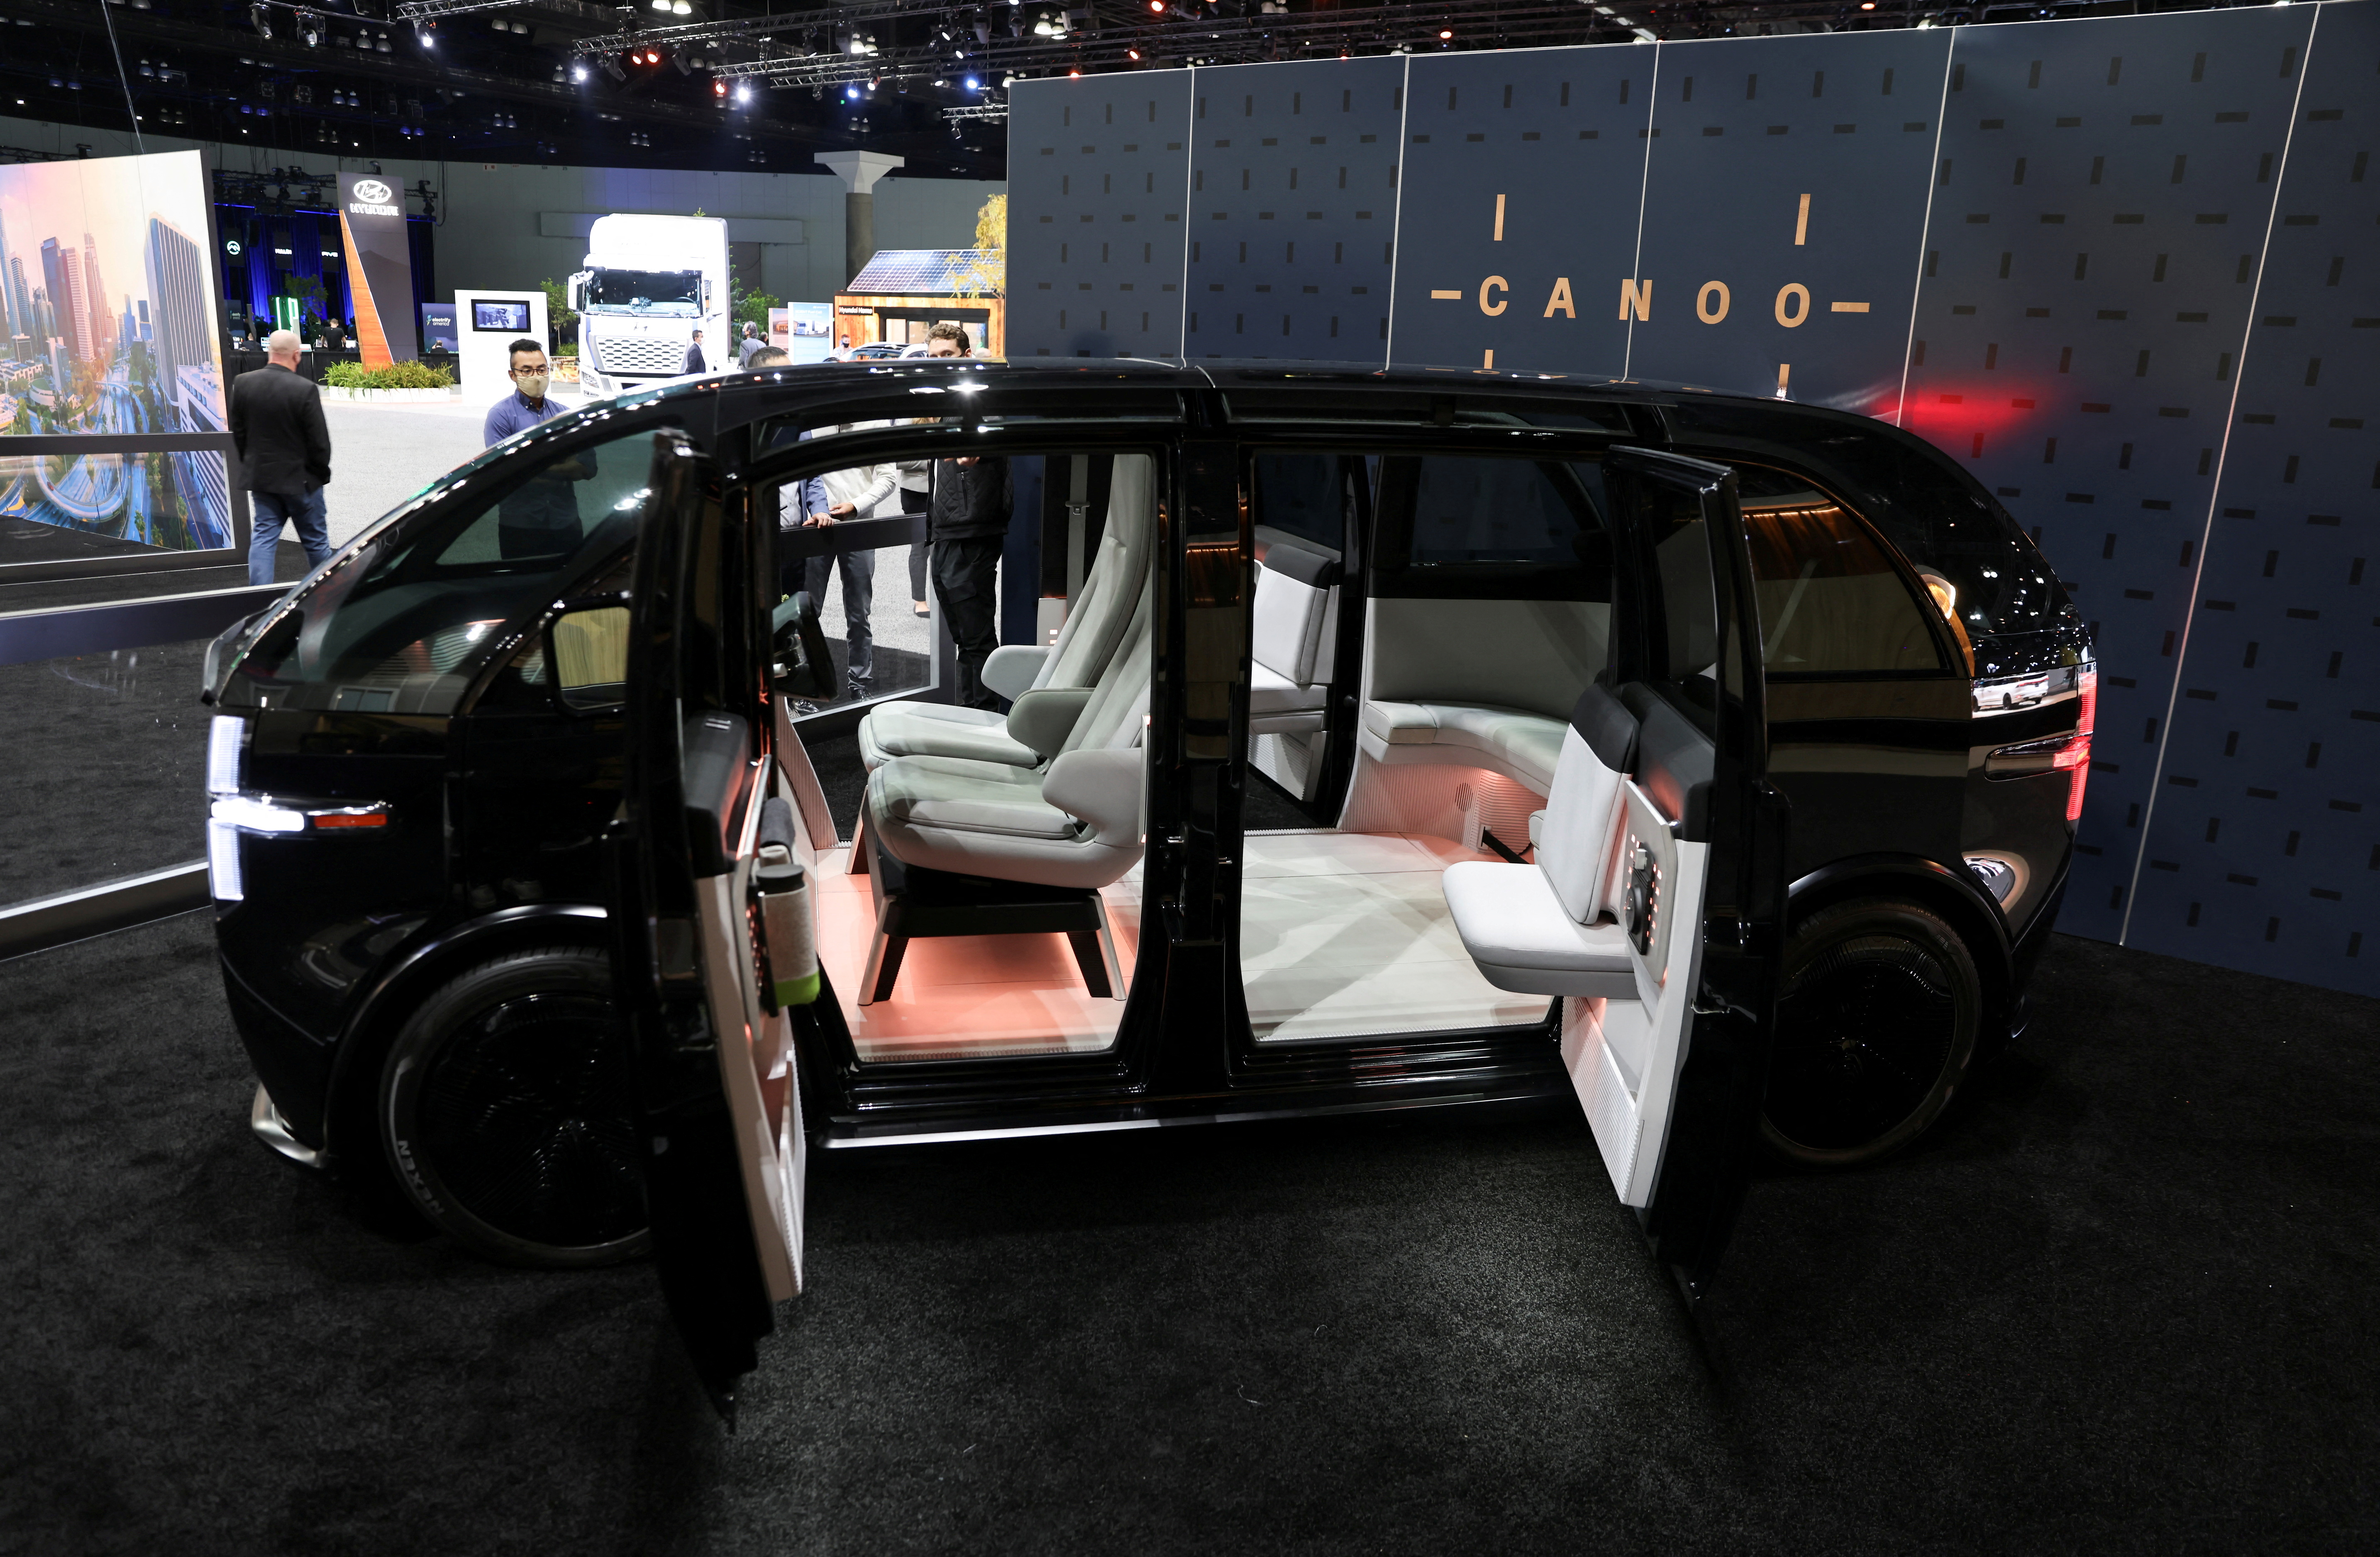 Canoo Lifestyle Vehicle at the 2021 LA Auto Show